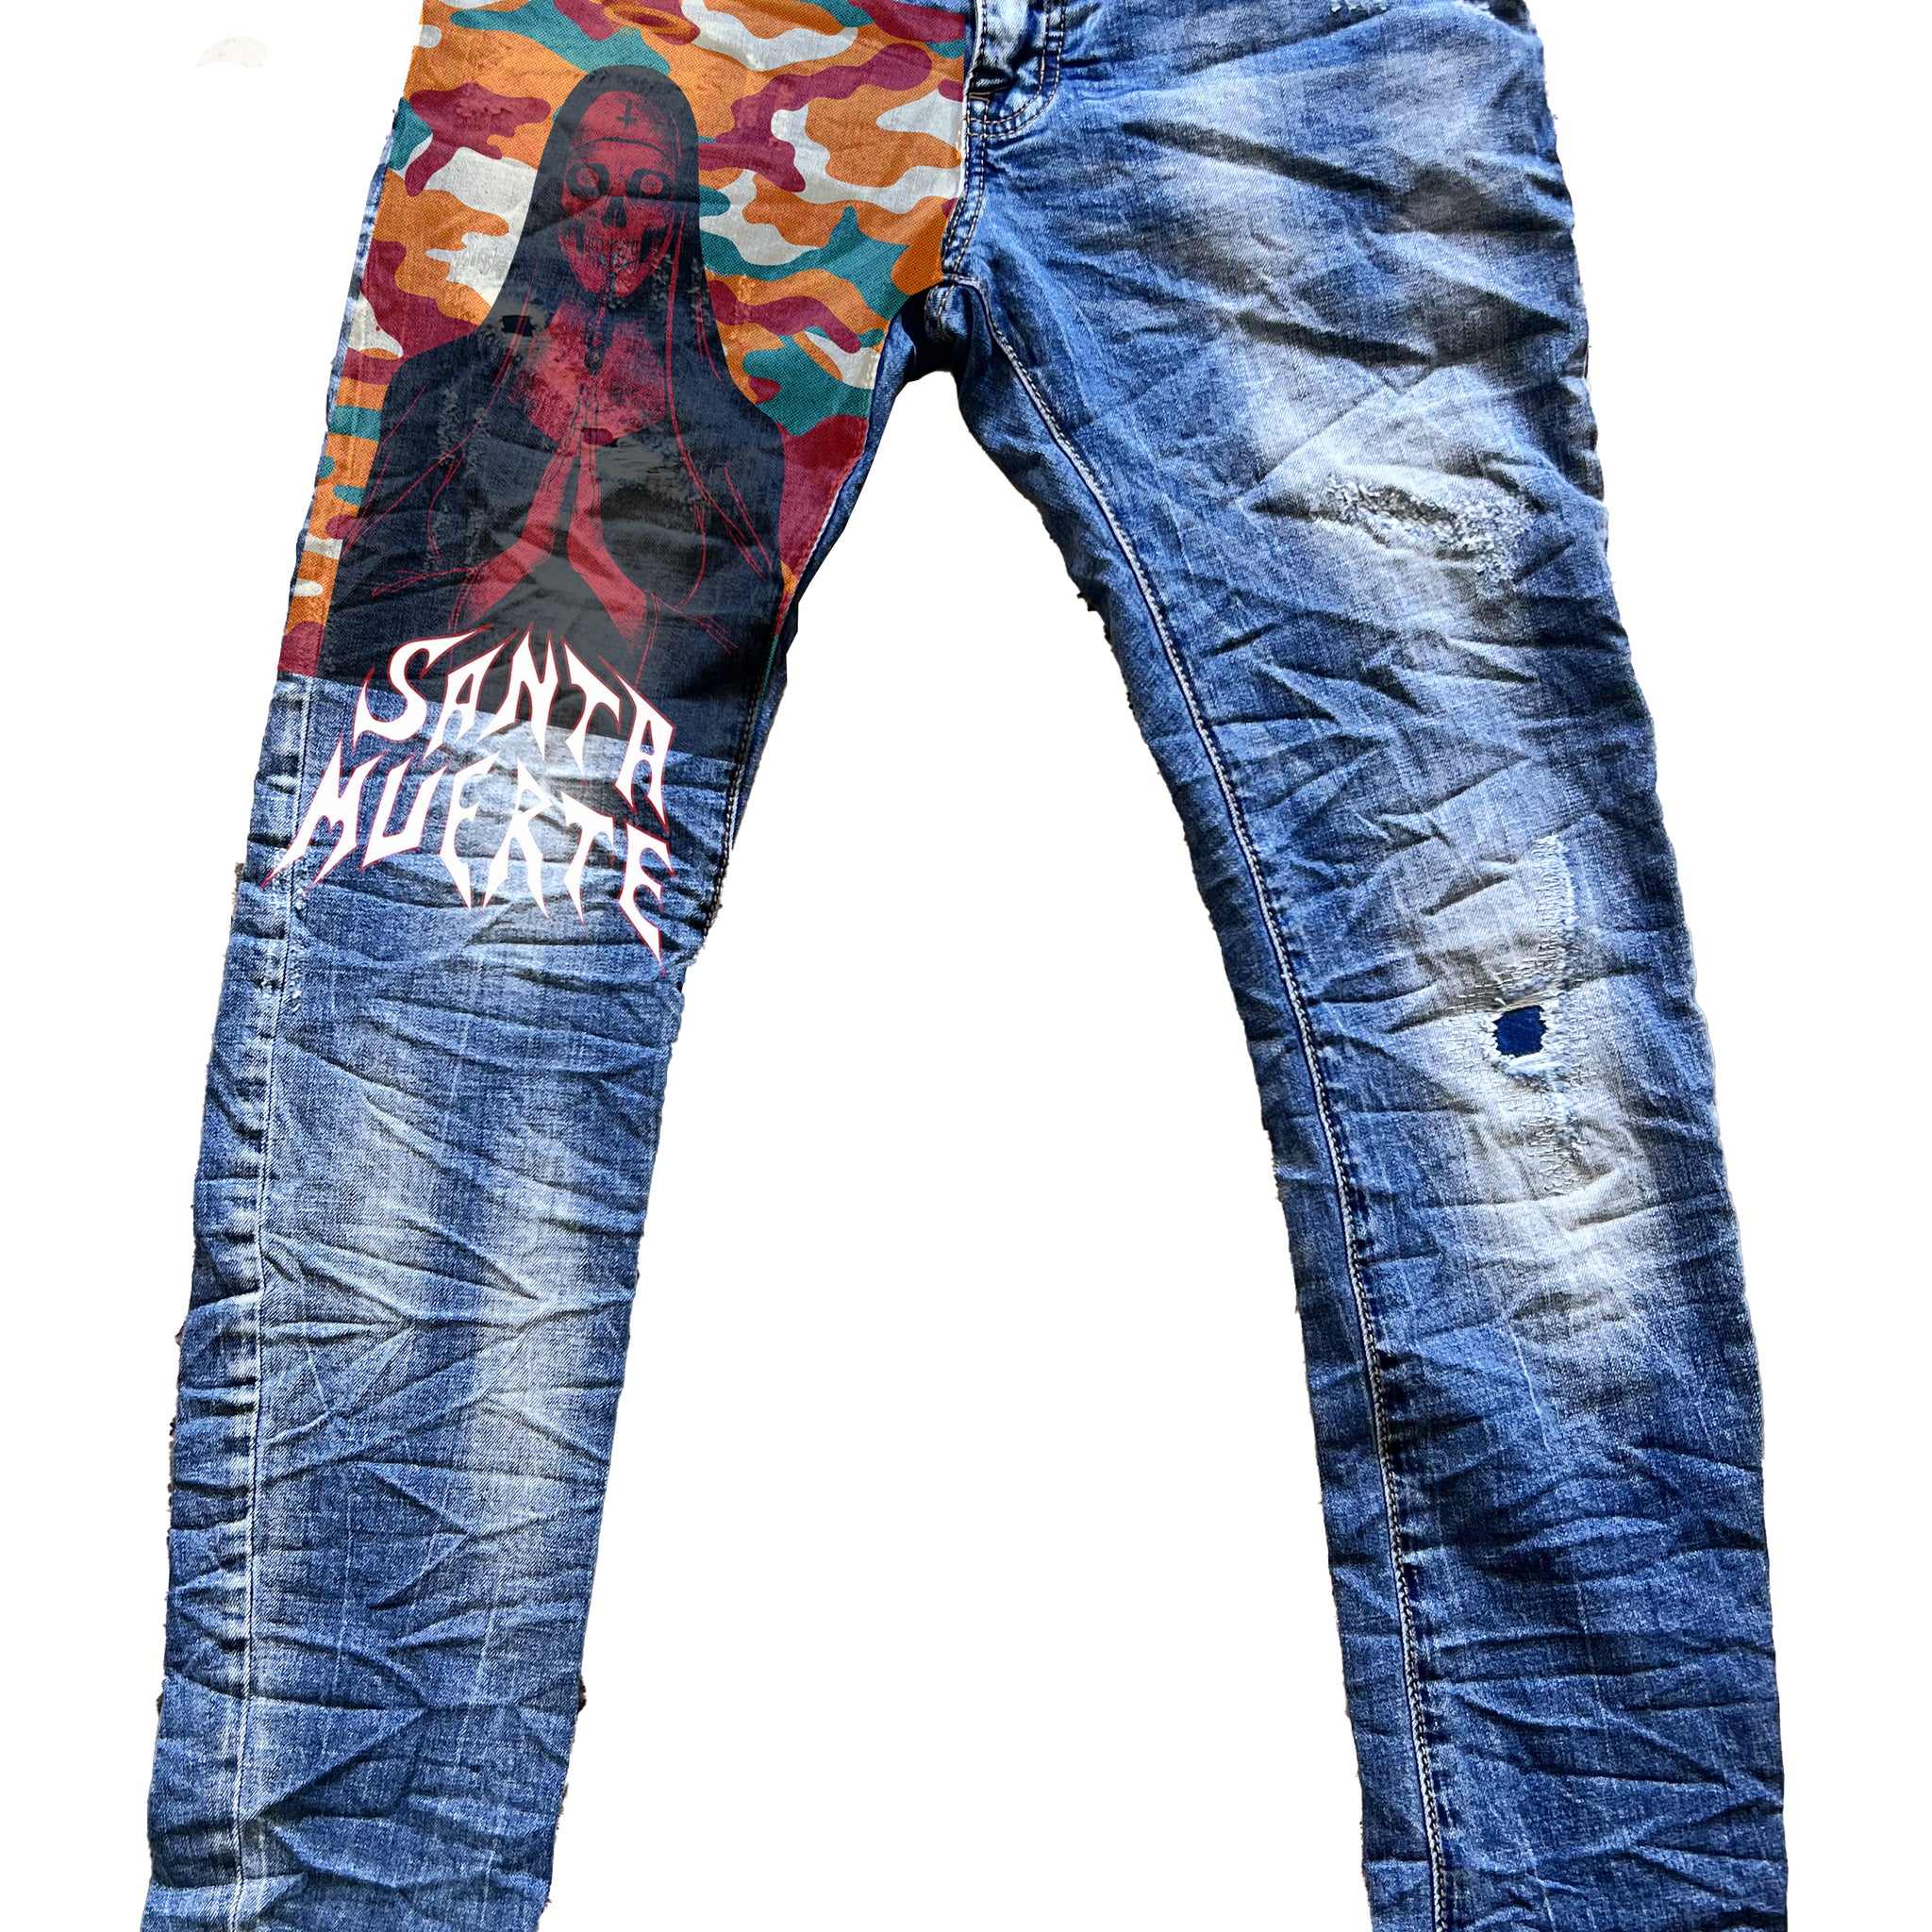 DPM69 Men's Jeans Denim Santa Muerte